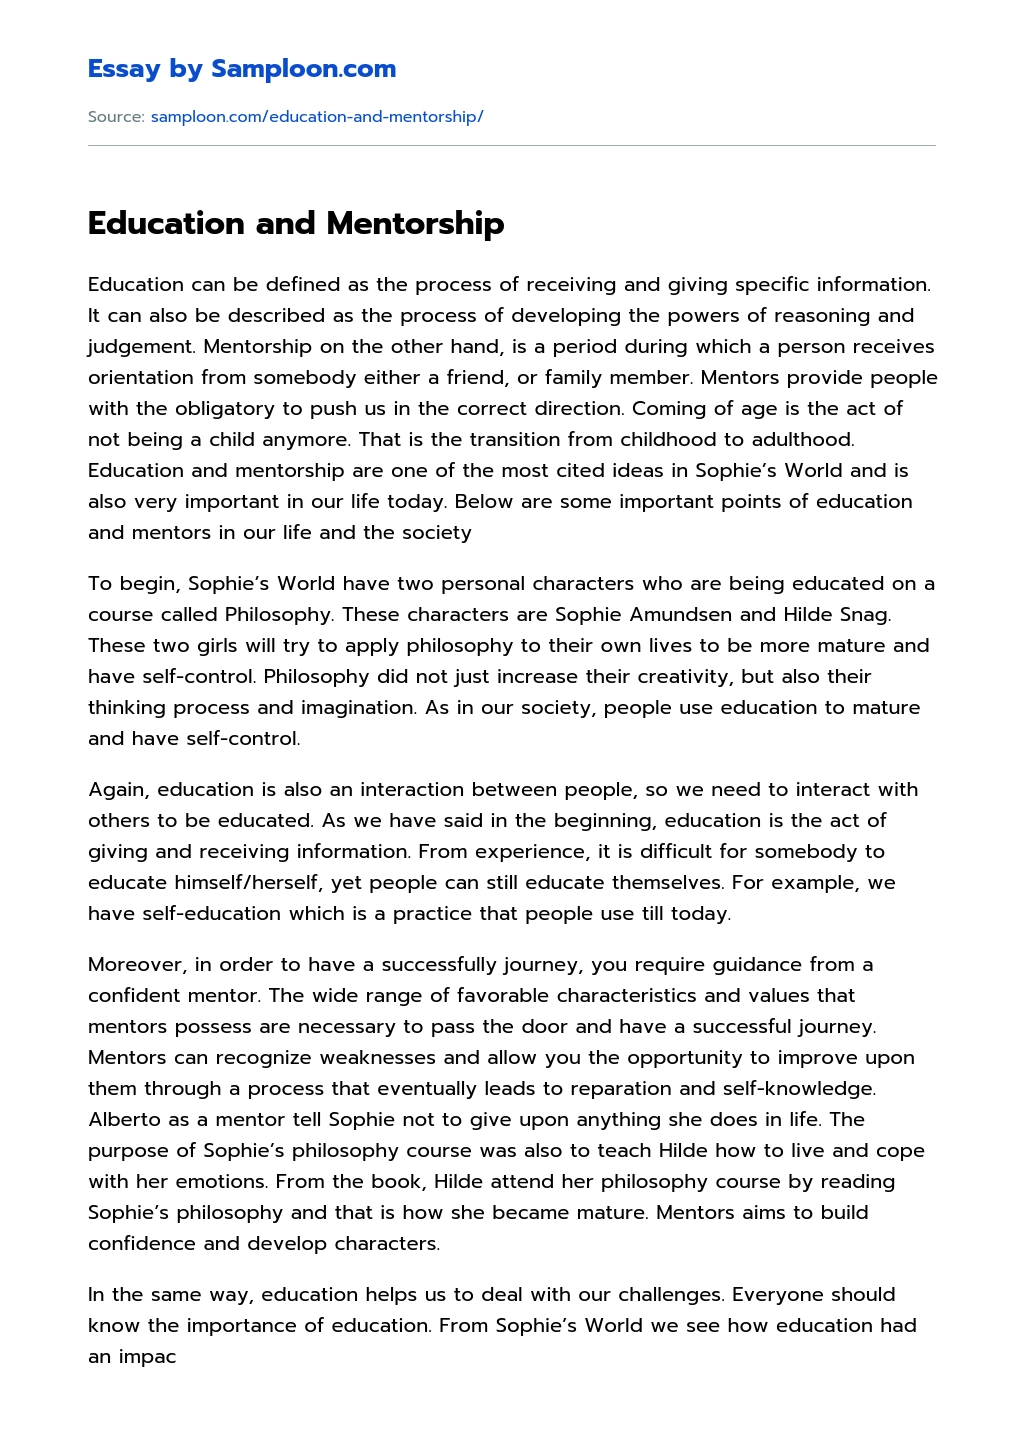 Education and Mentorship essay